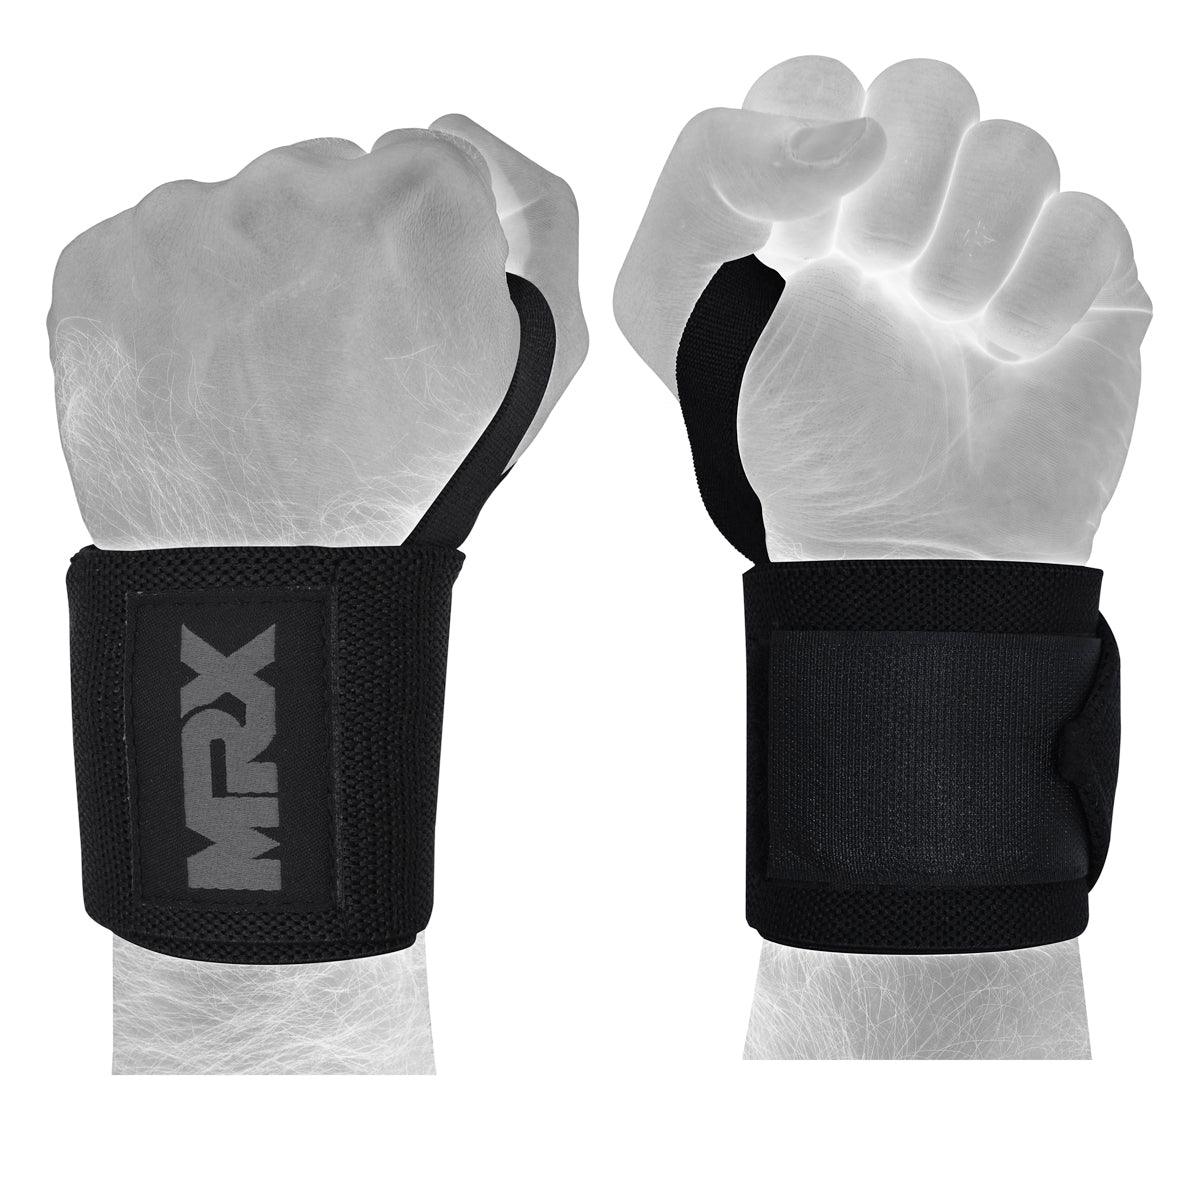 Mrx Weight Lifting Wrist Wraps Bodybuilding Gym Workout Training Unisex - MRX Products 